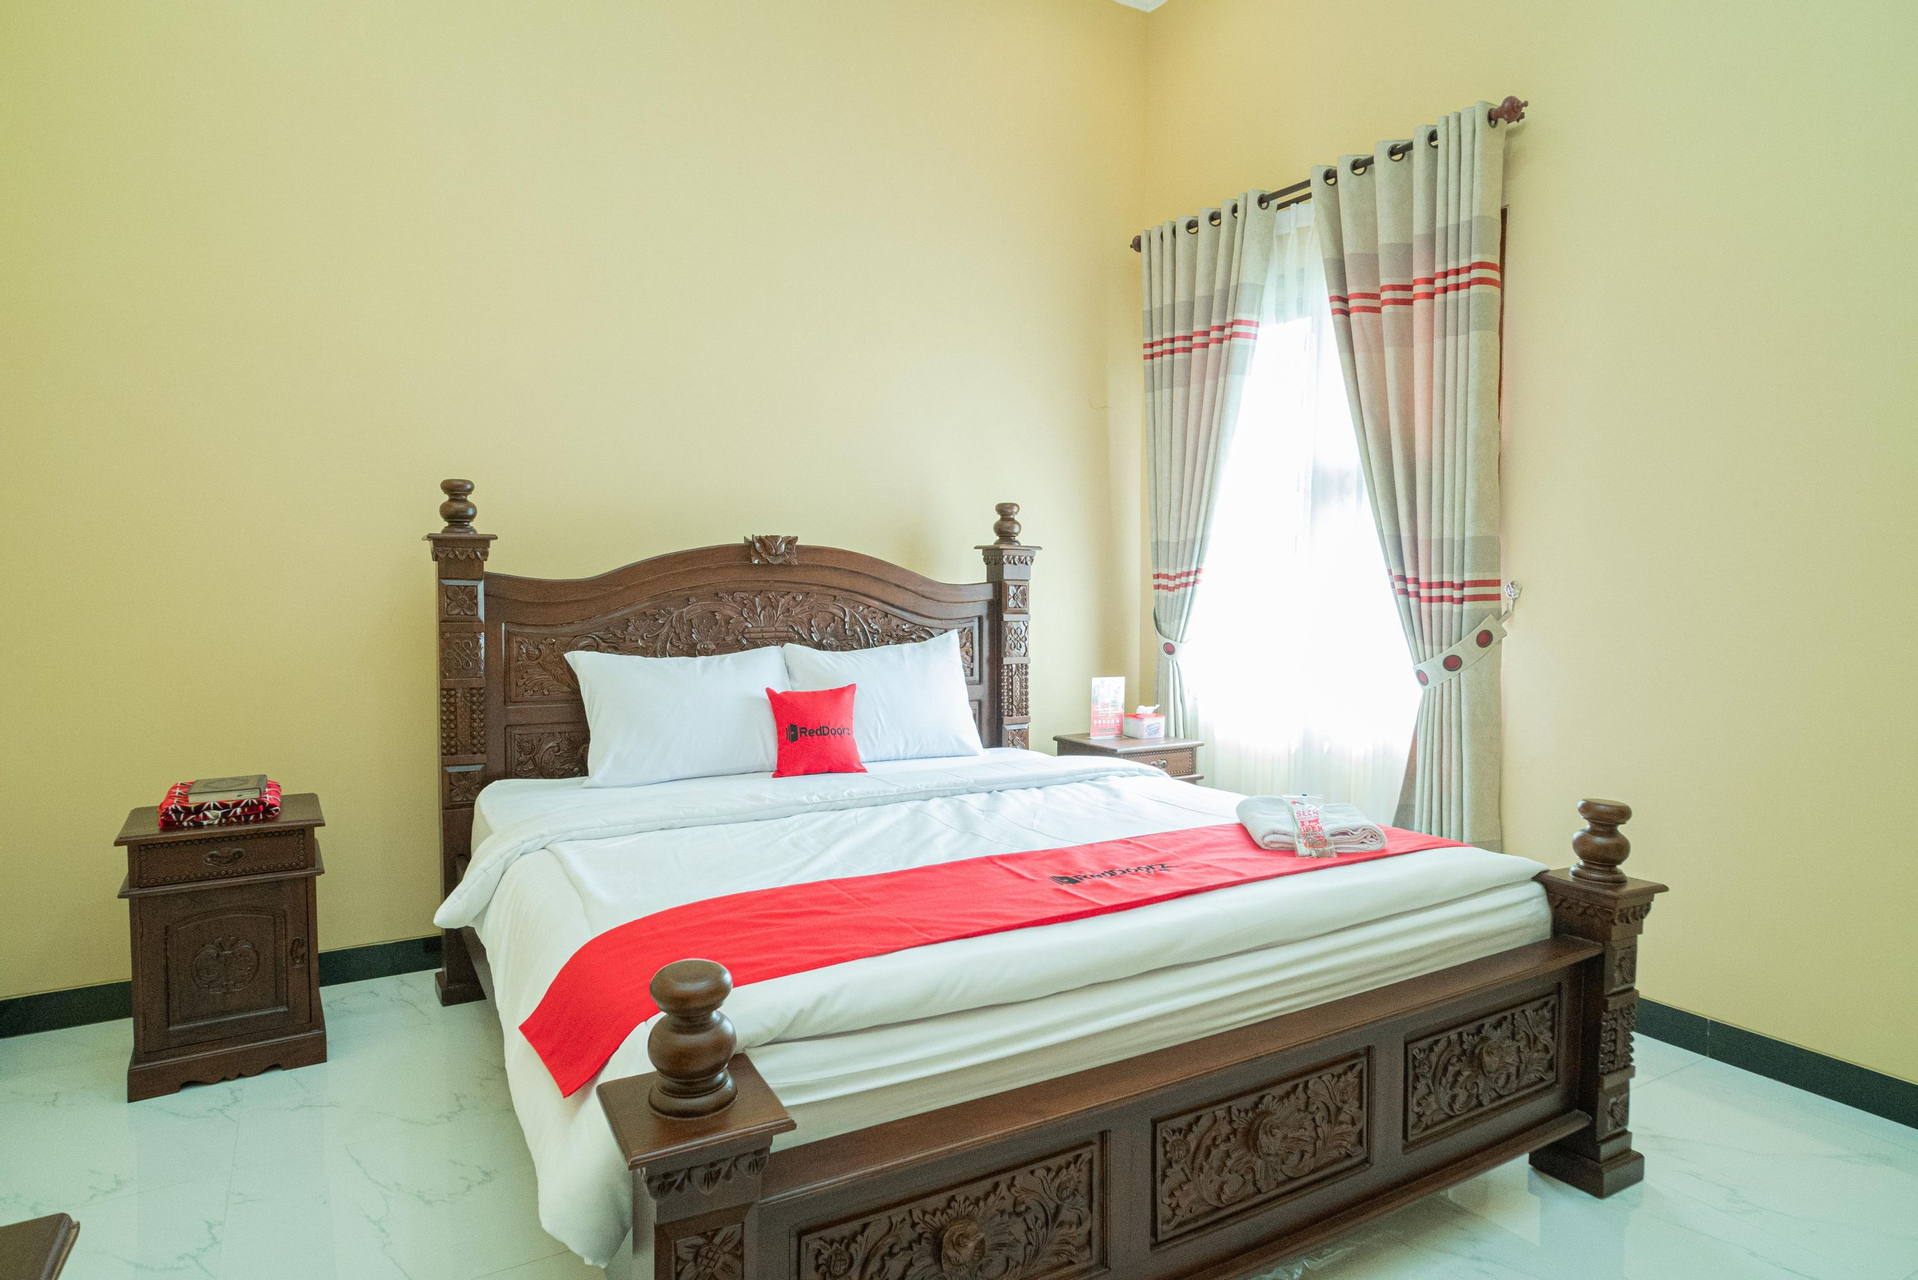 Bedroom 4, RedDoorz Syariah near RSUD Kota Malang, Malang